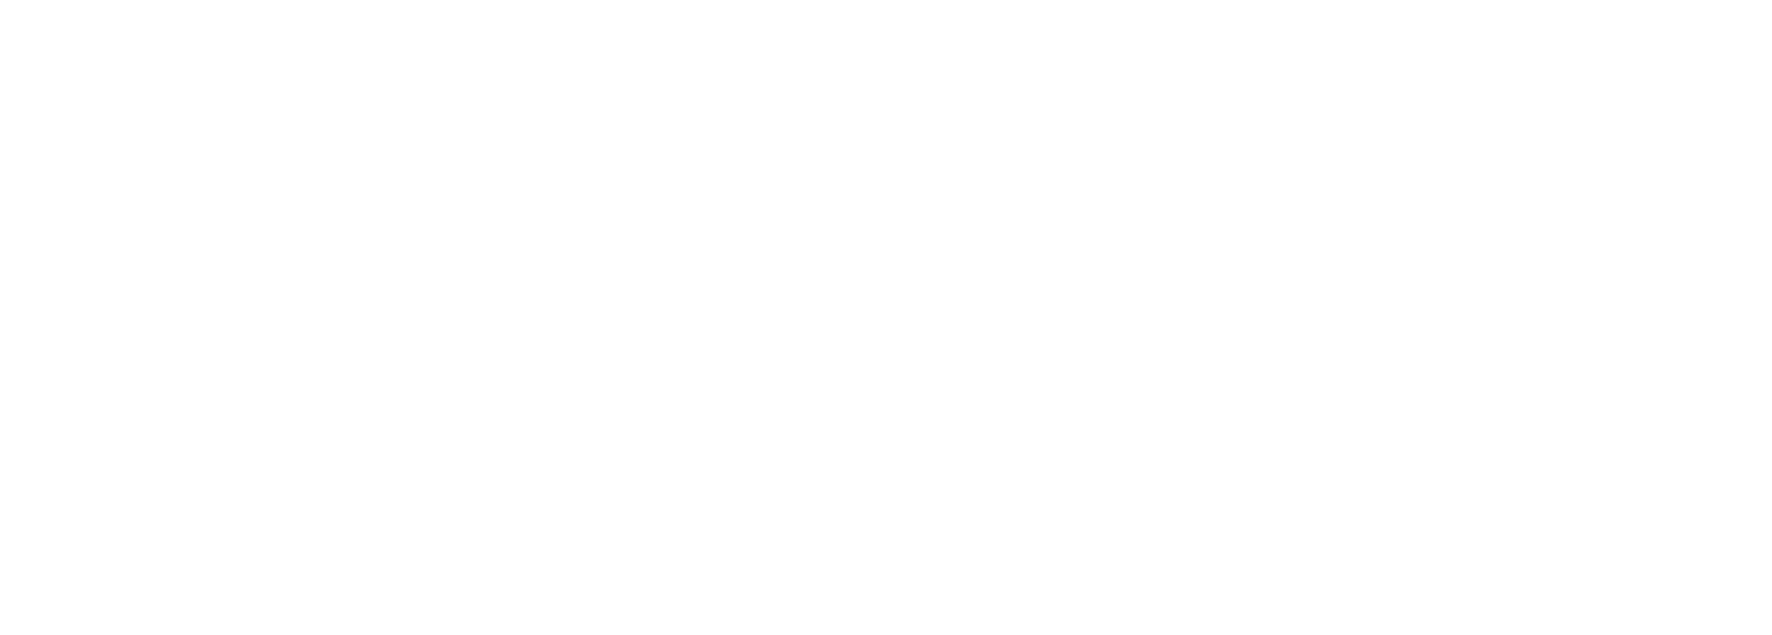 Event Rocket Pros Logo